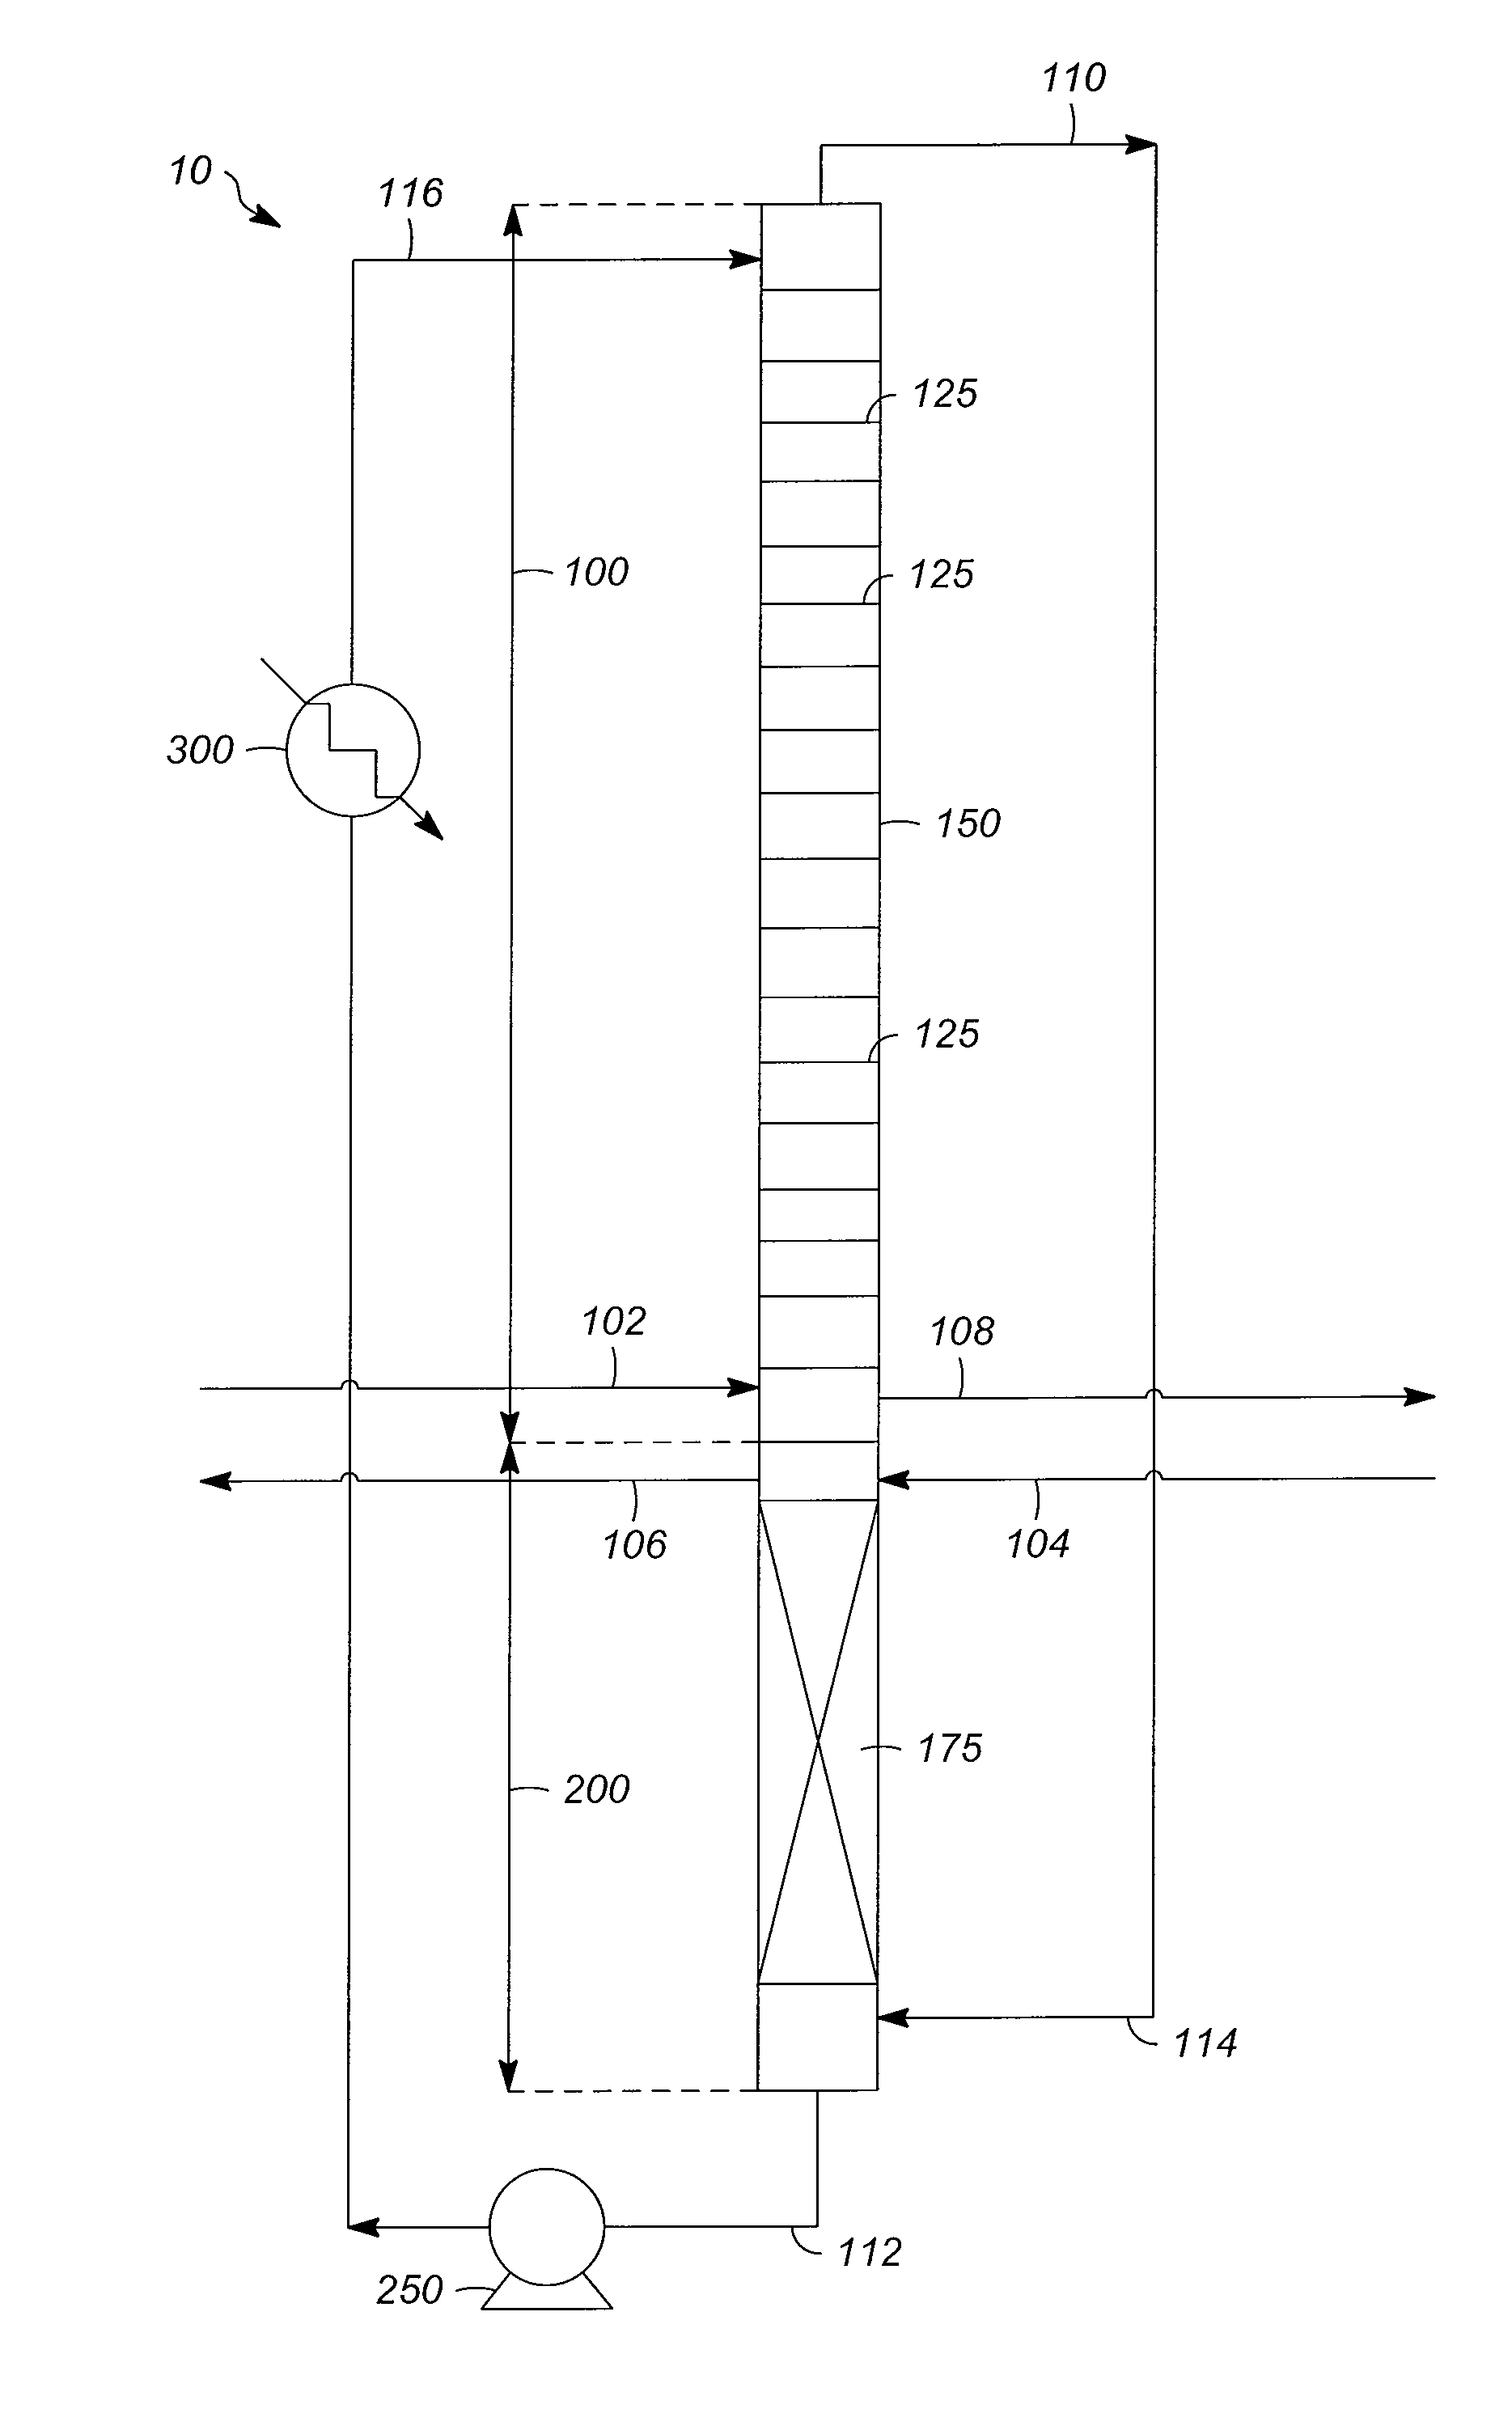 Configuration of contacting zones in vapor liquid contacting apparatuses